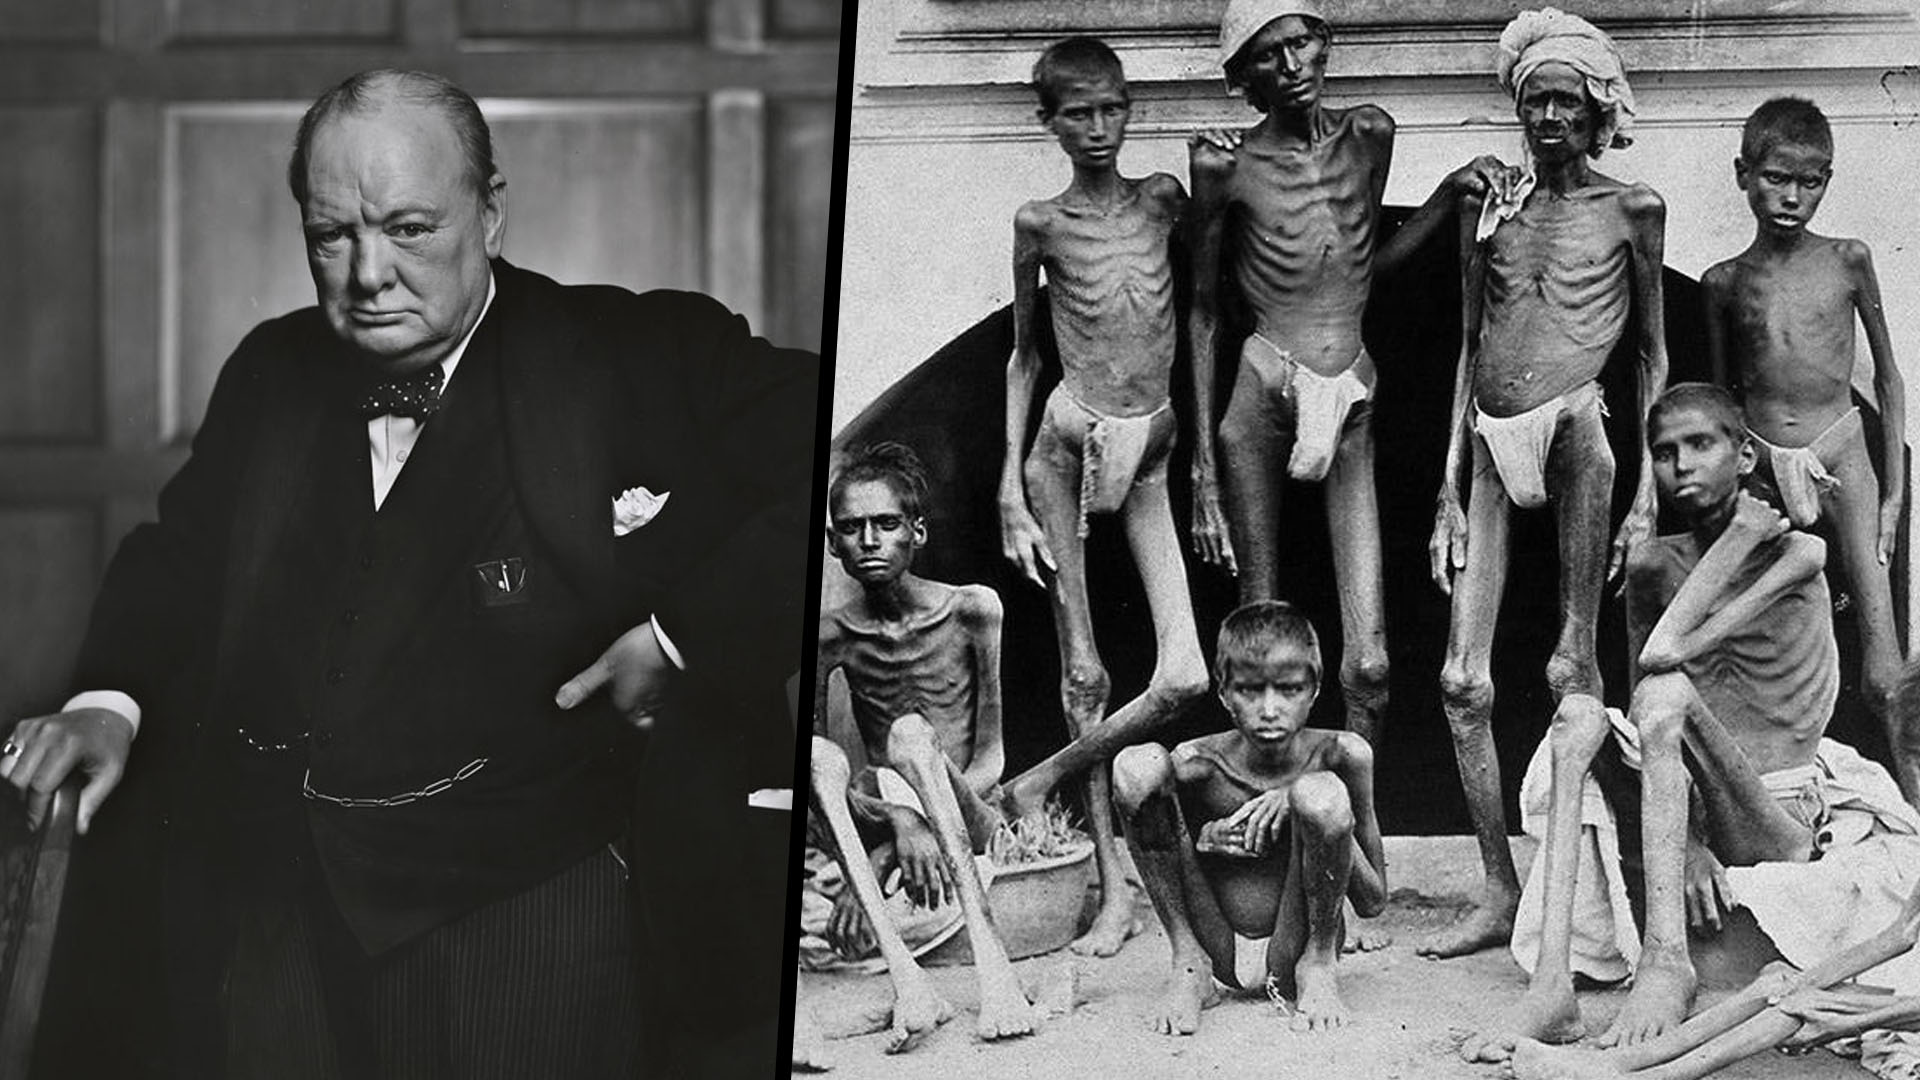 British empire India 100 million deaths Churchill